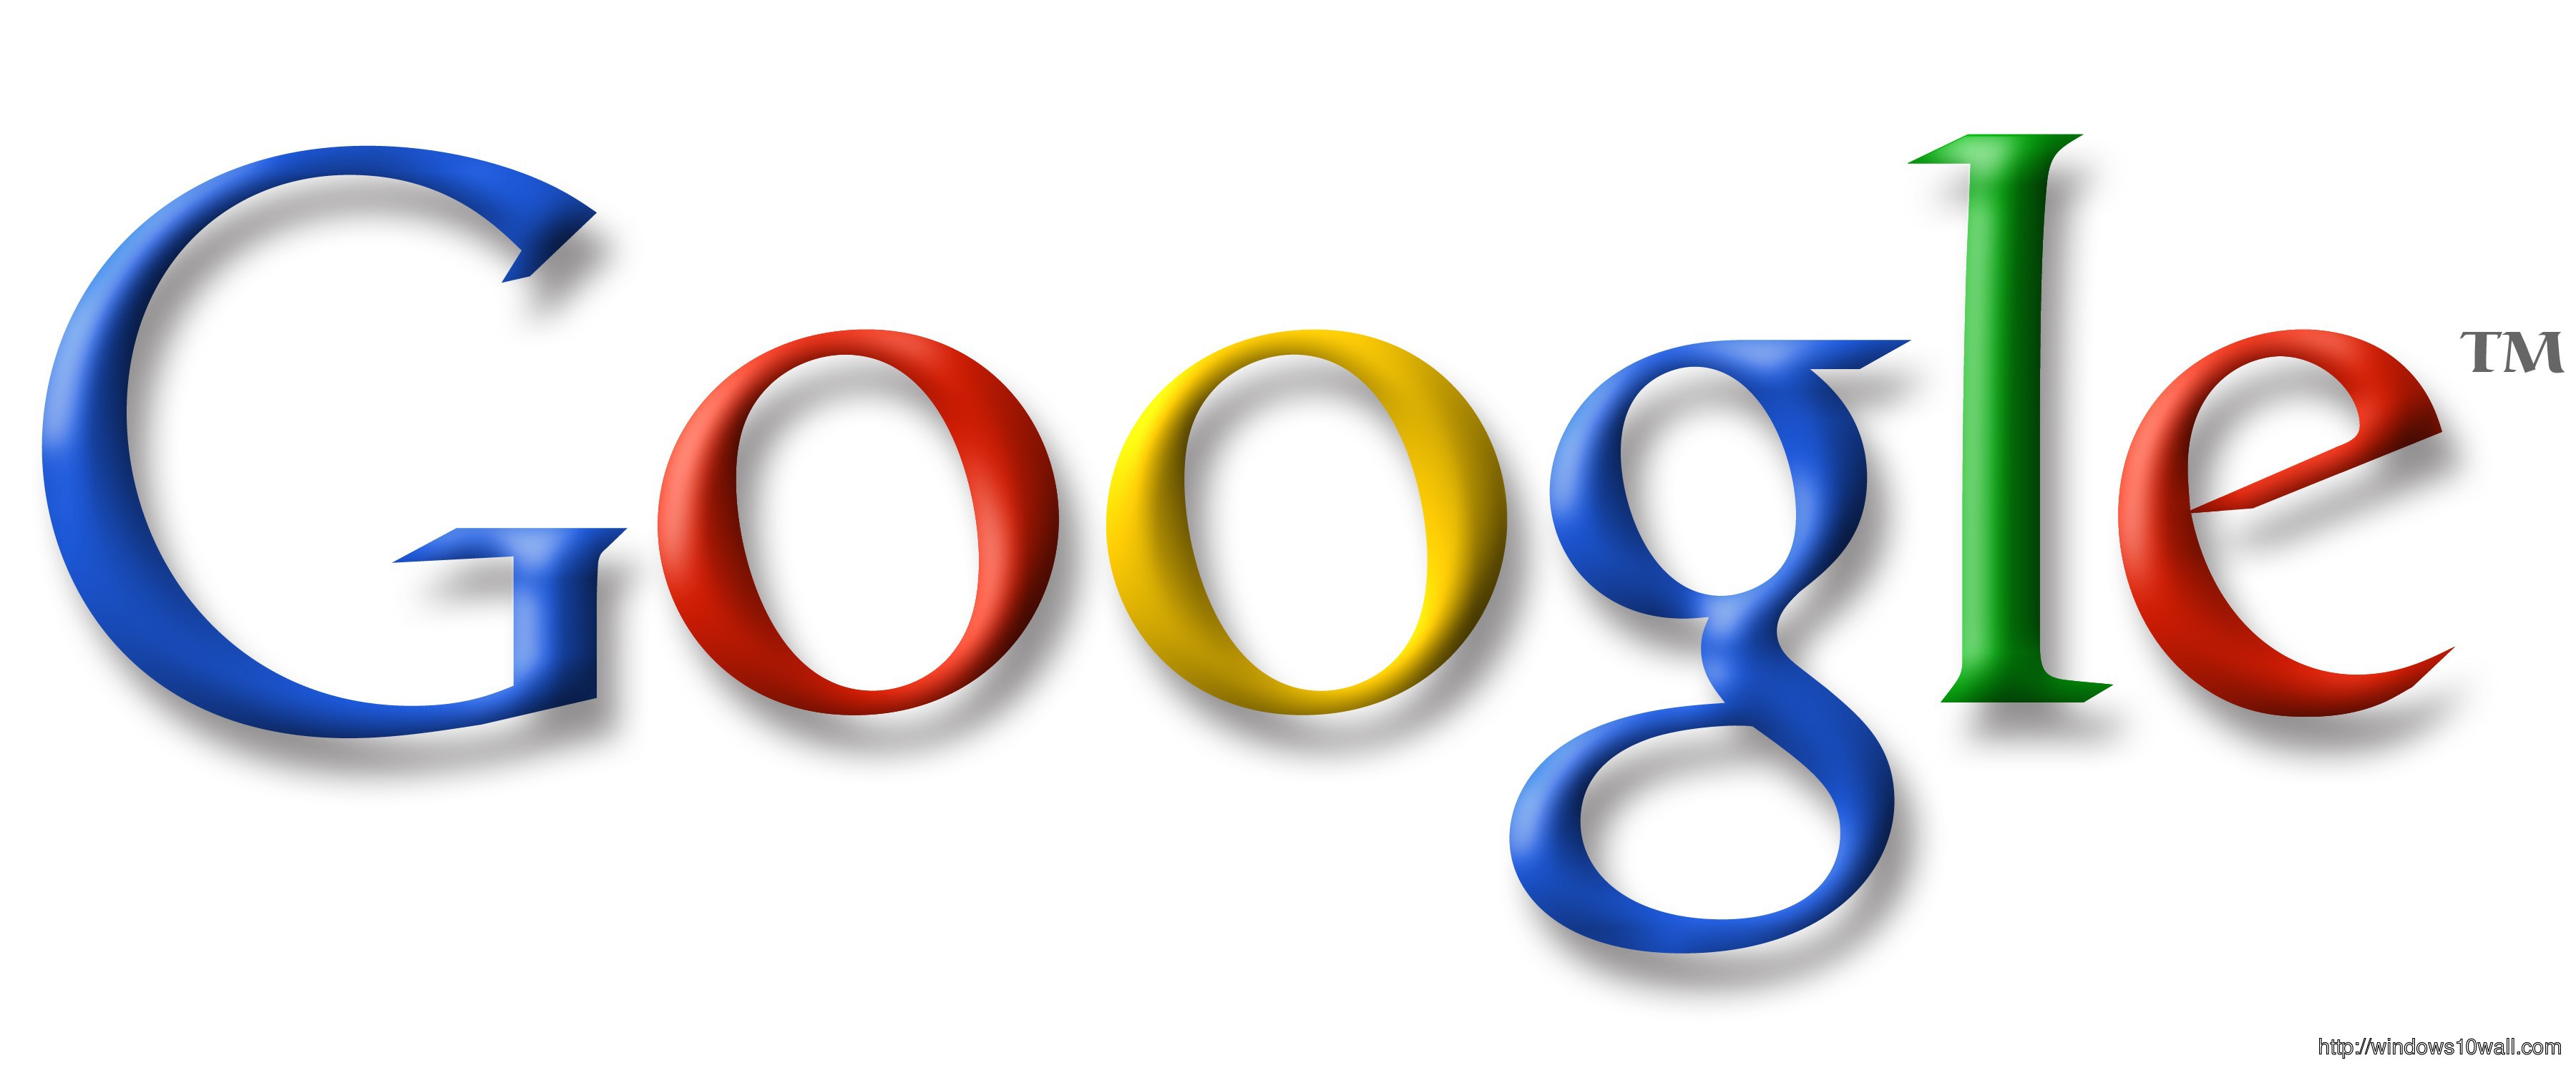 Google Logo Background Wallpaper